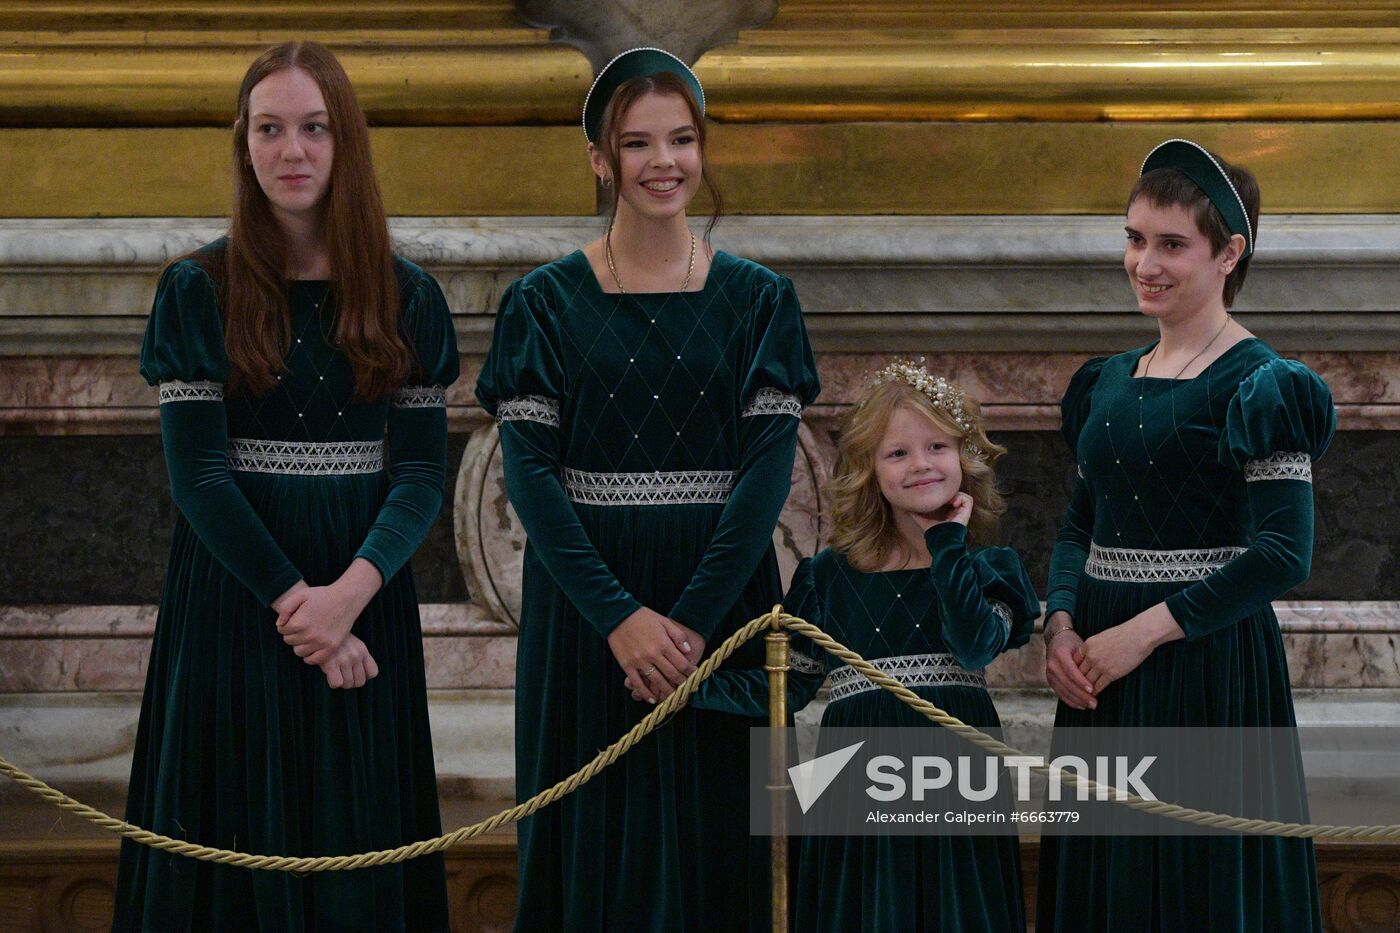 Russia Romanov Royal Family Descendant Wedding